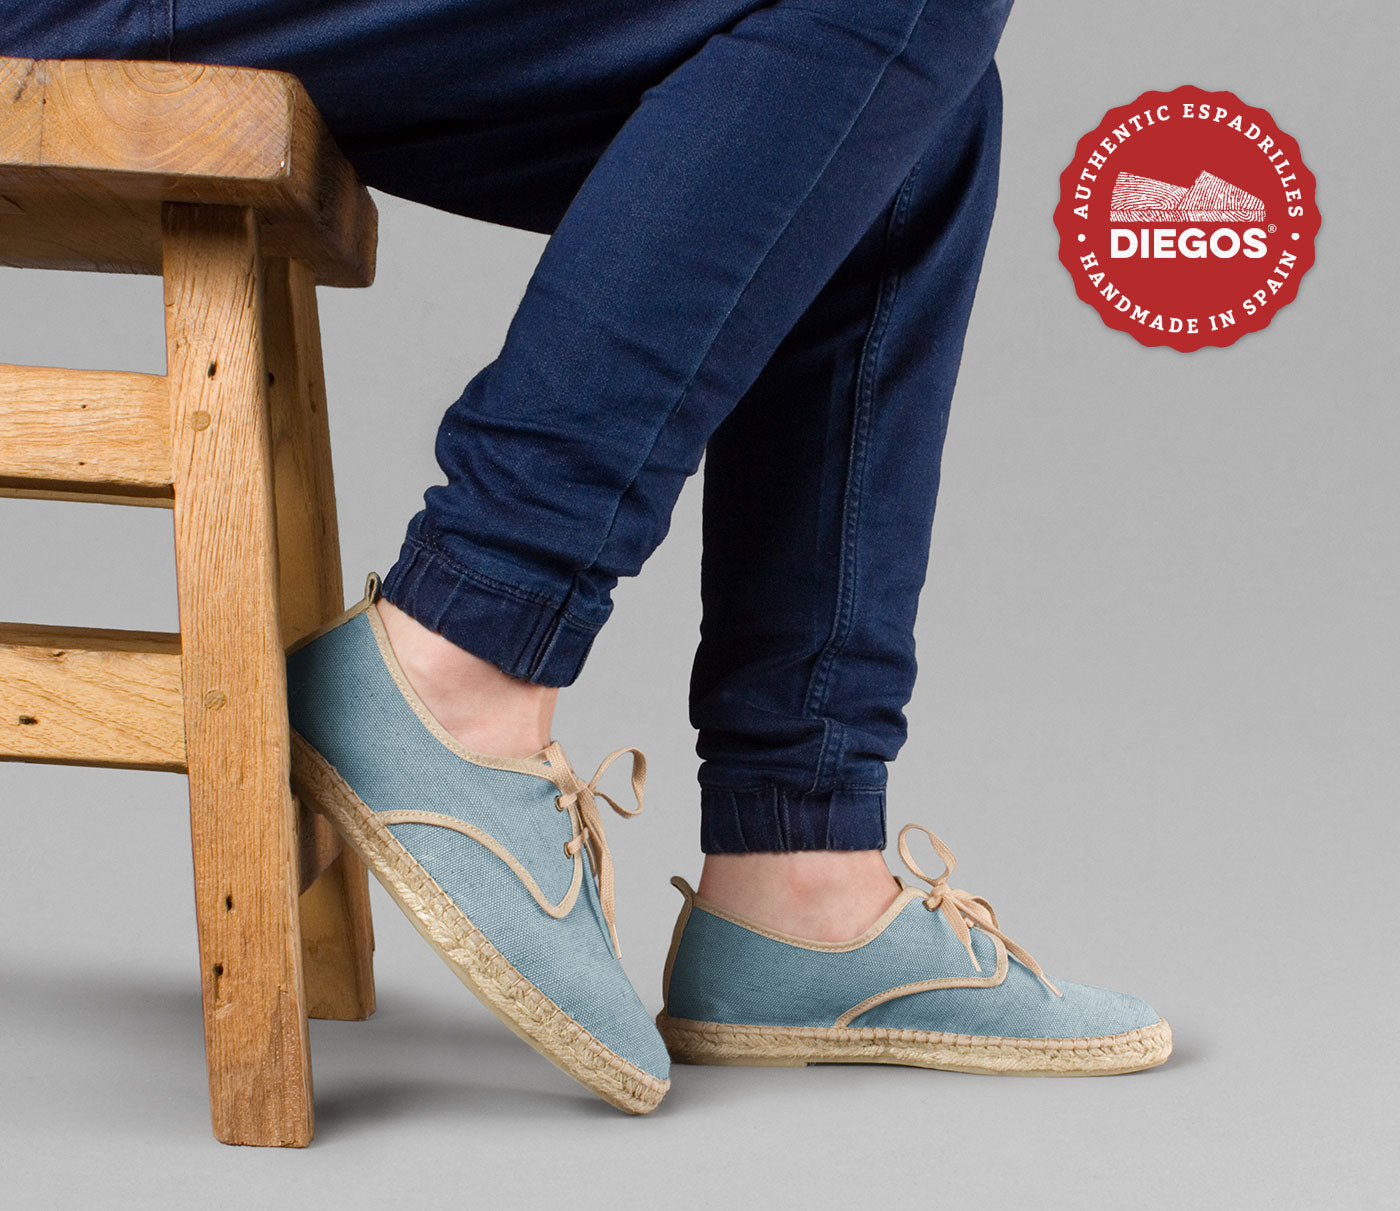 Diegos Men's Handmade Espadrilles Shoes